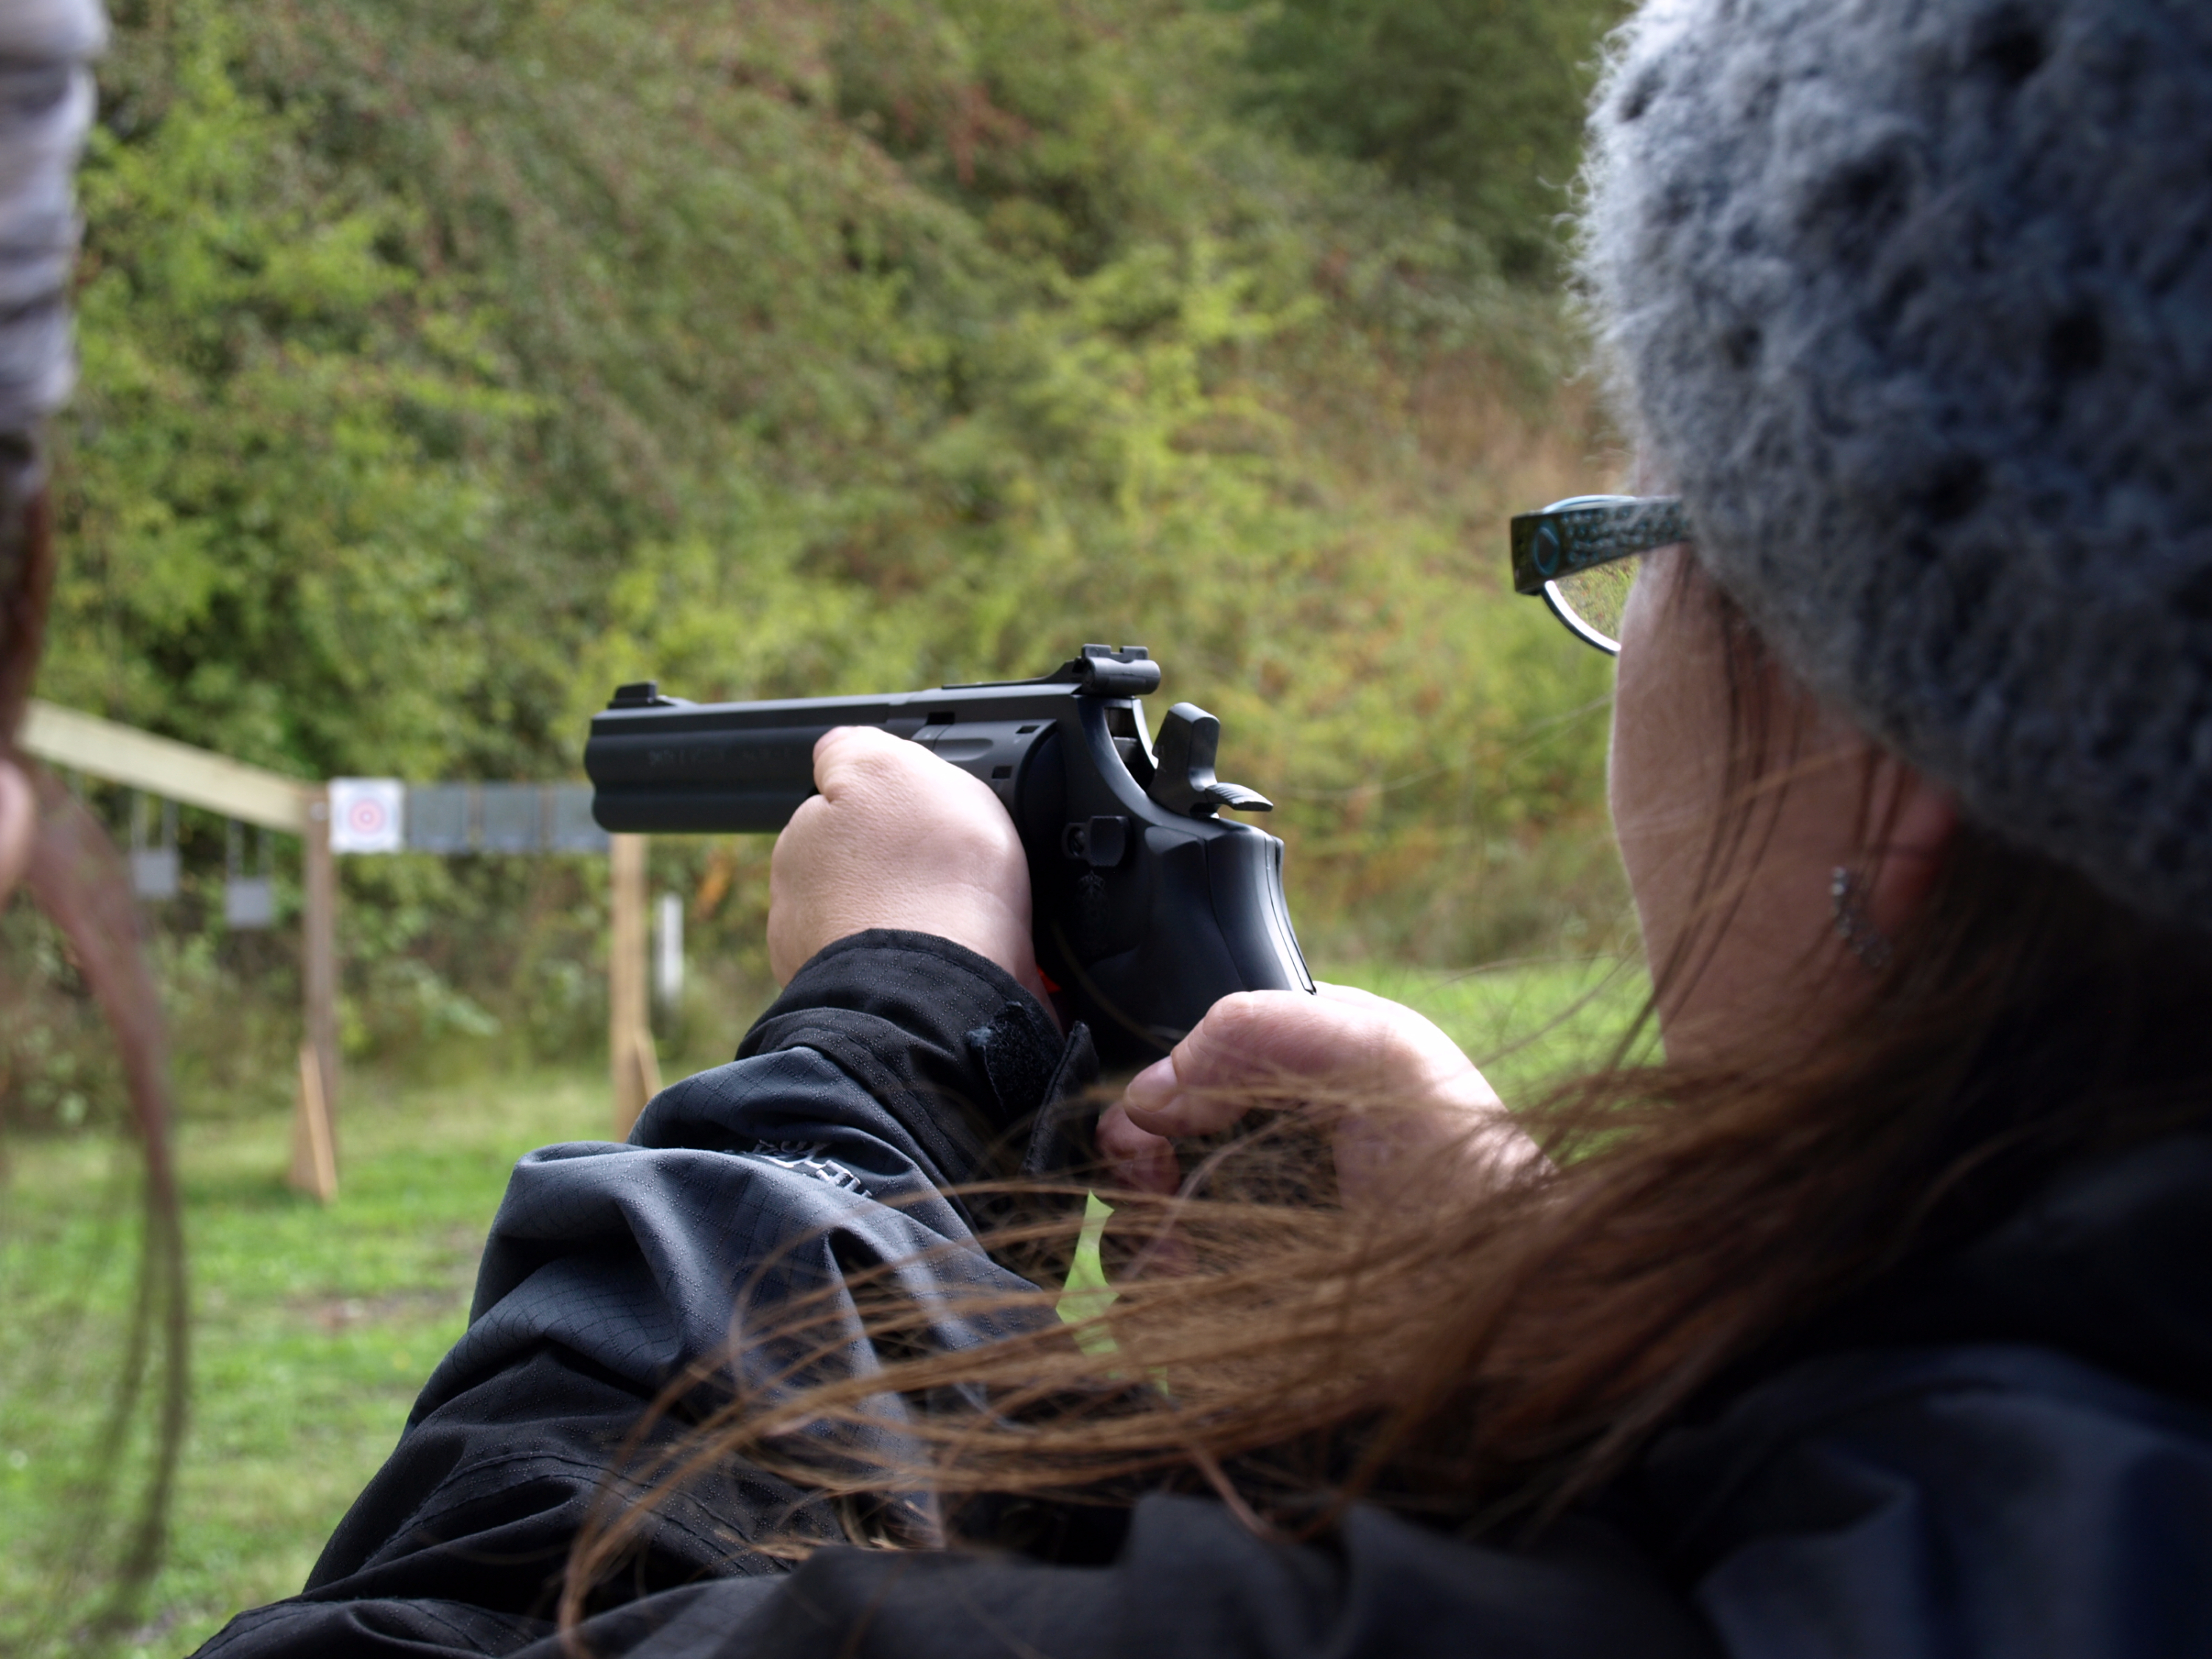 Pistol Shooting Experience Derbyshire - Field Sport UK